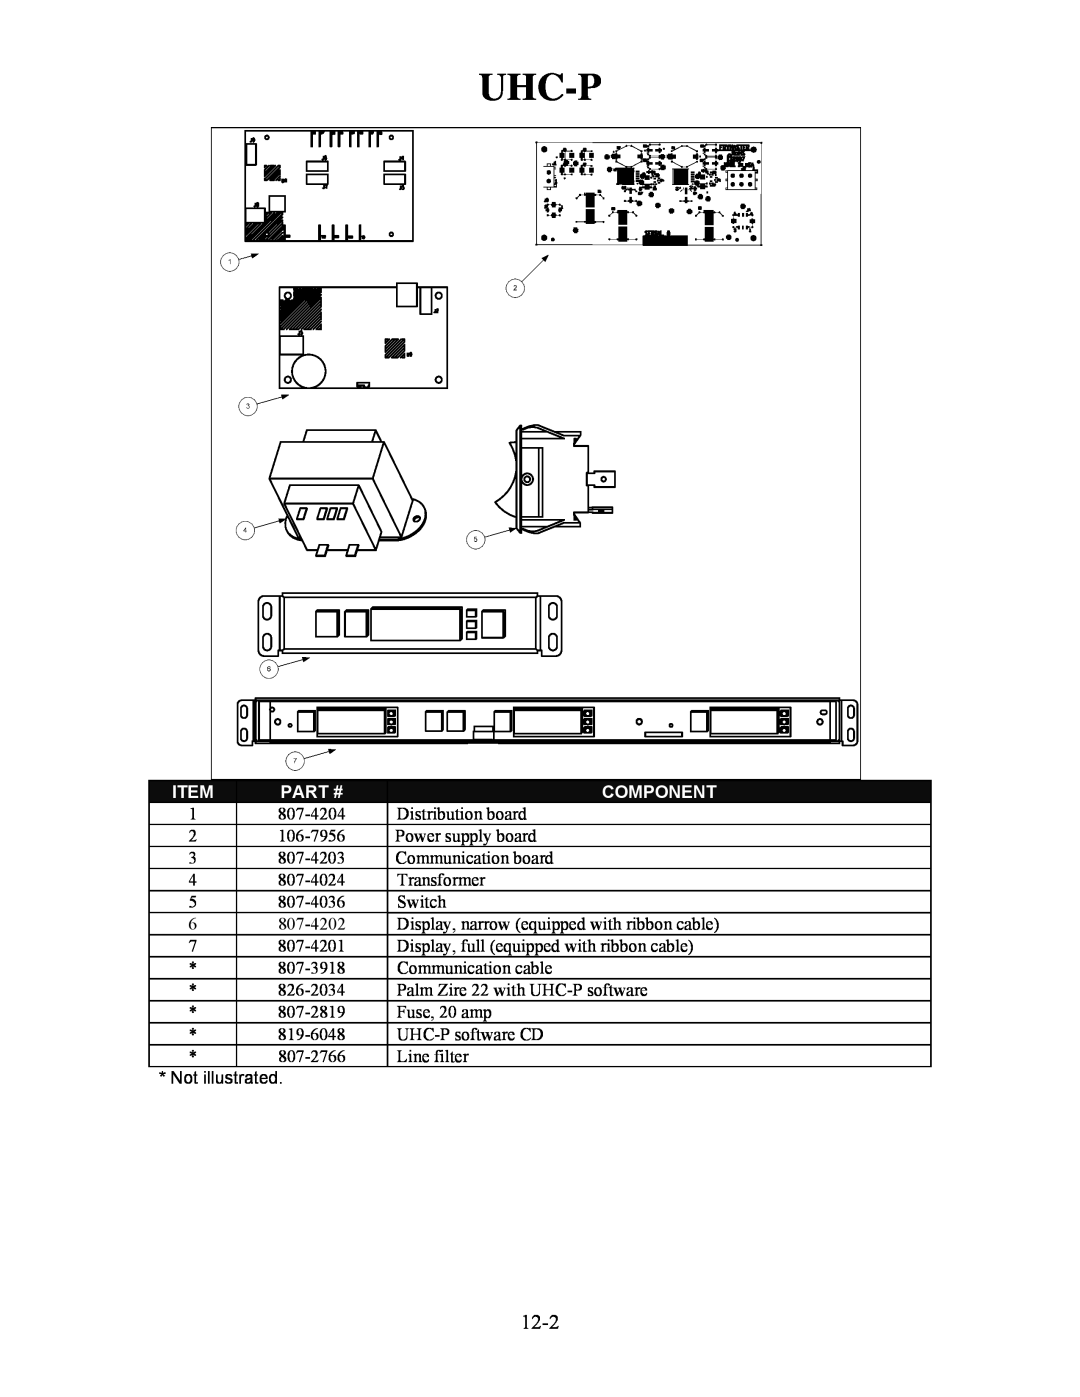 Frymaster H50 manual 12-2, Uhc-P, Part #, Component 